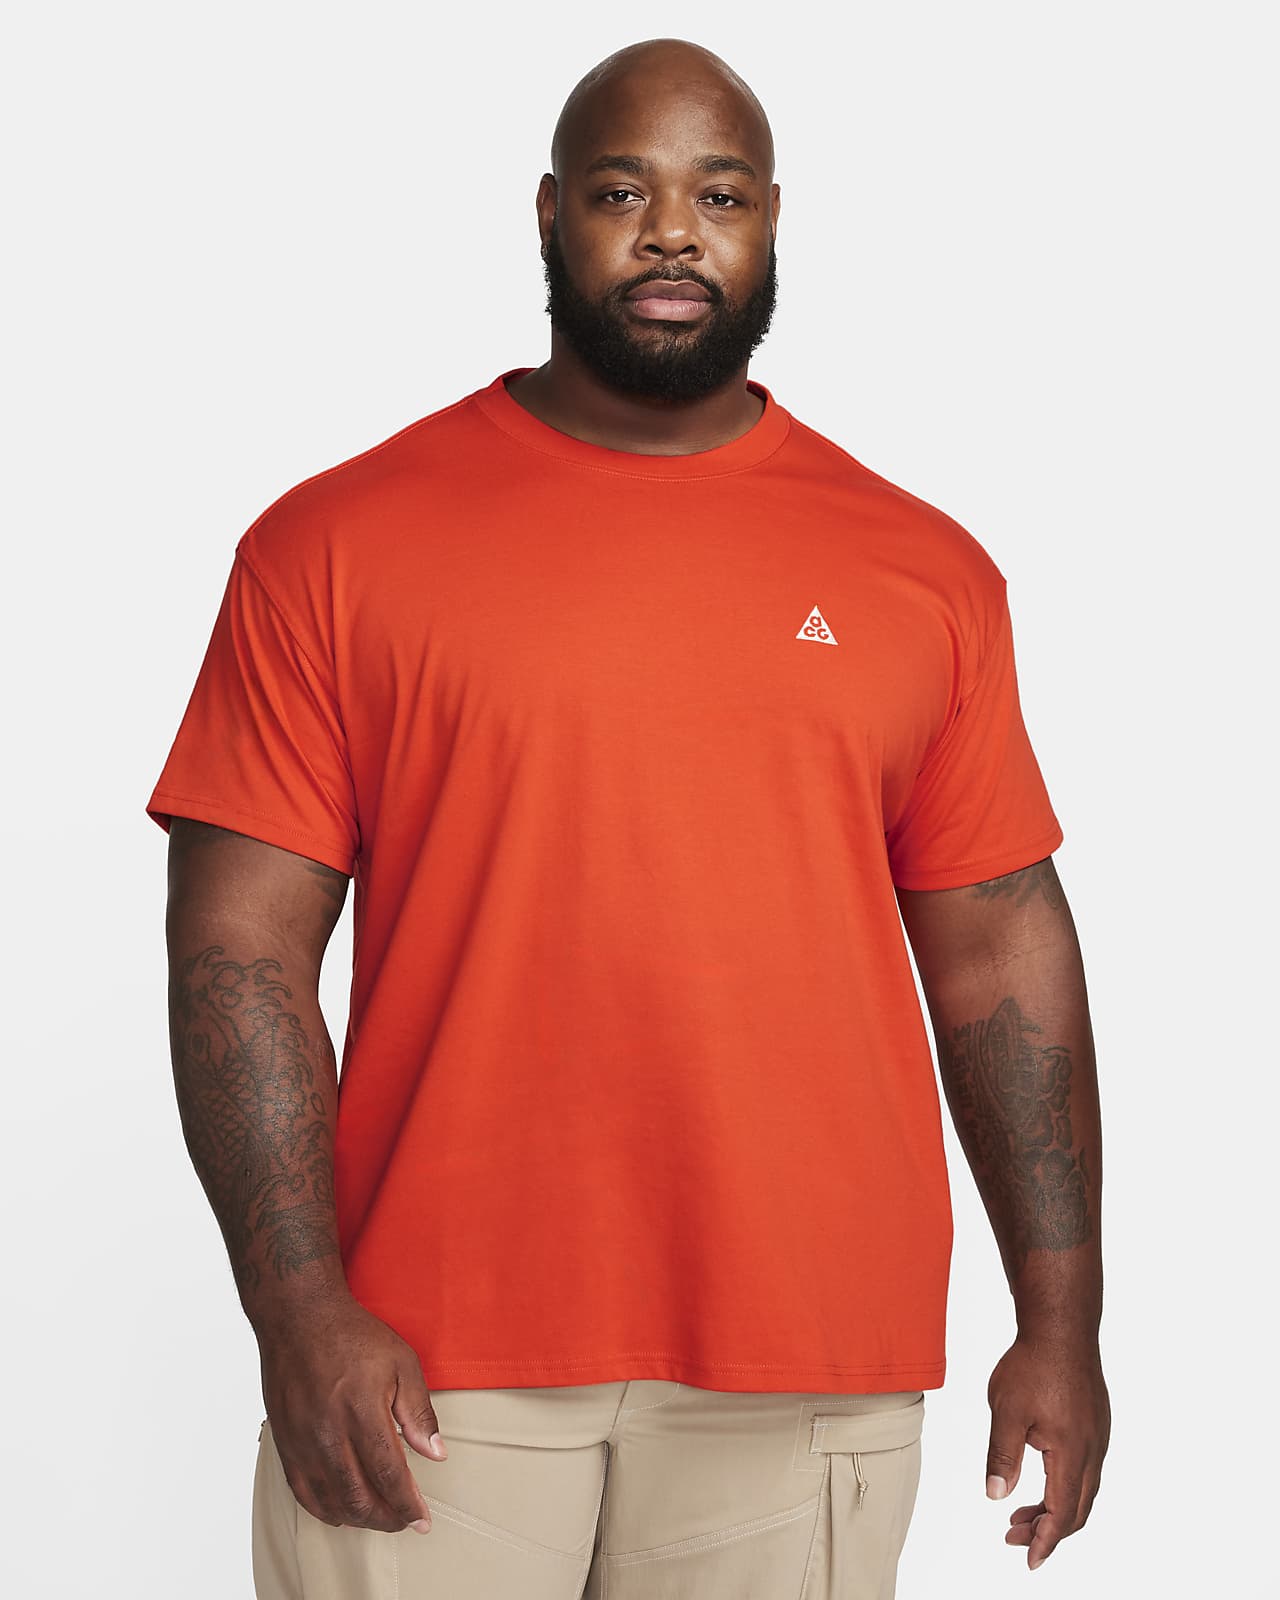 Men's T-Shirts & Tops. Nike IL